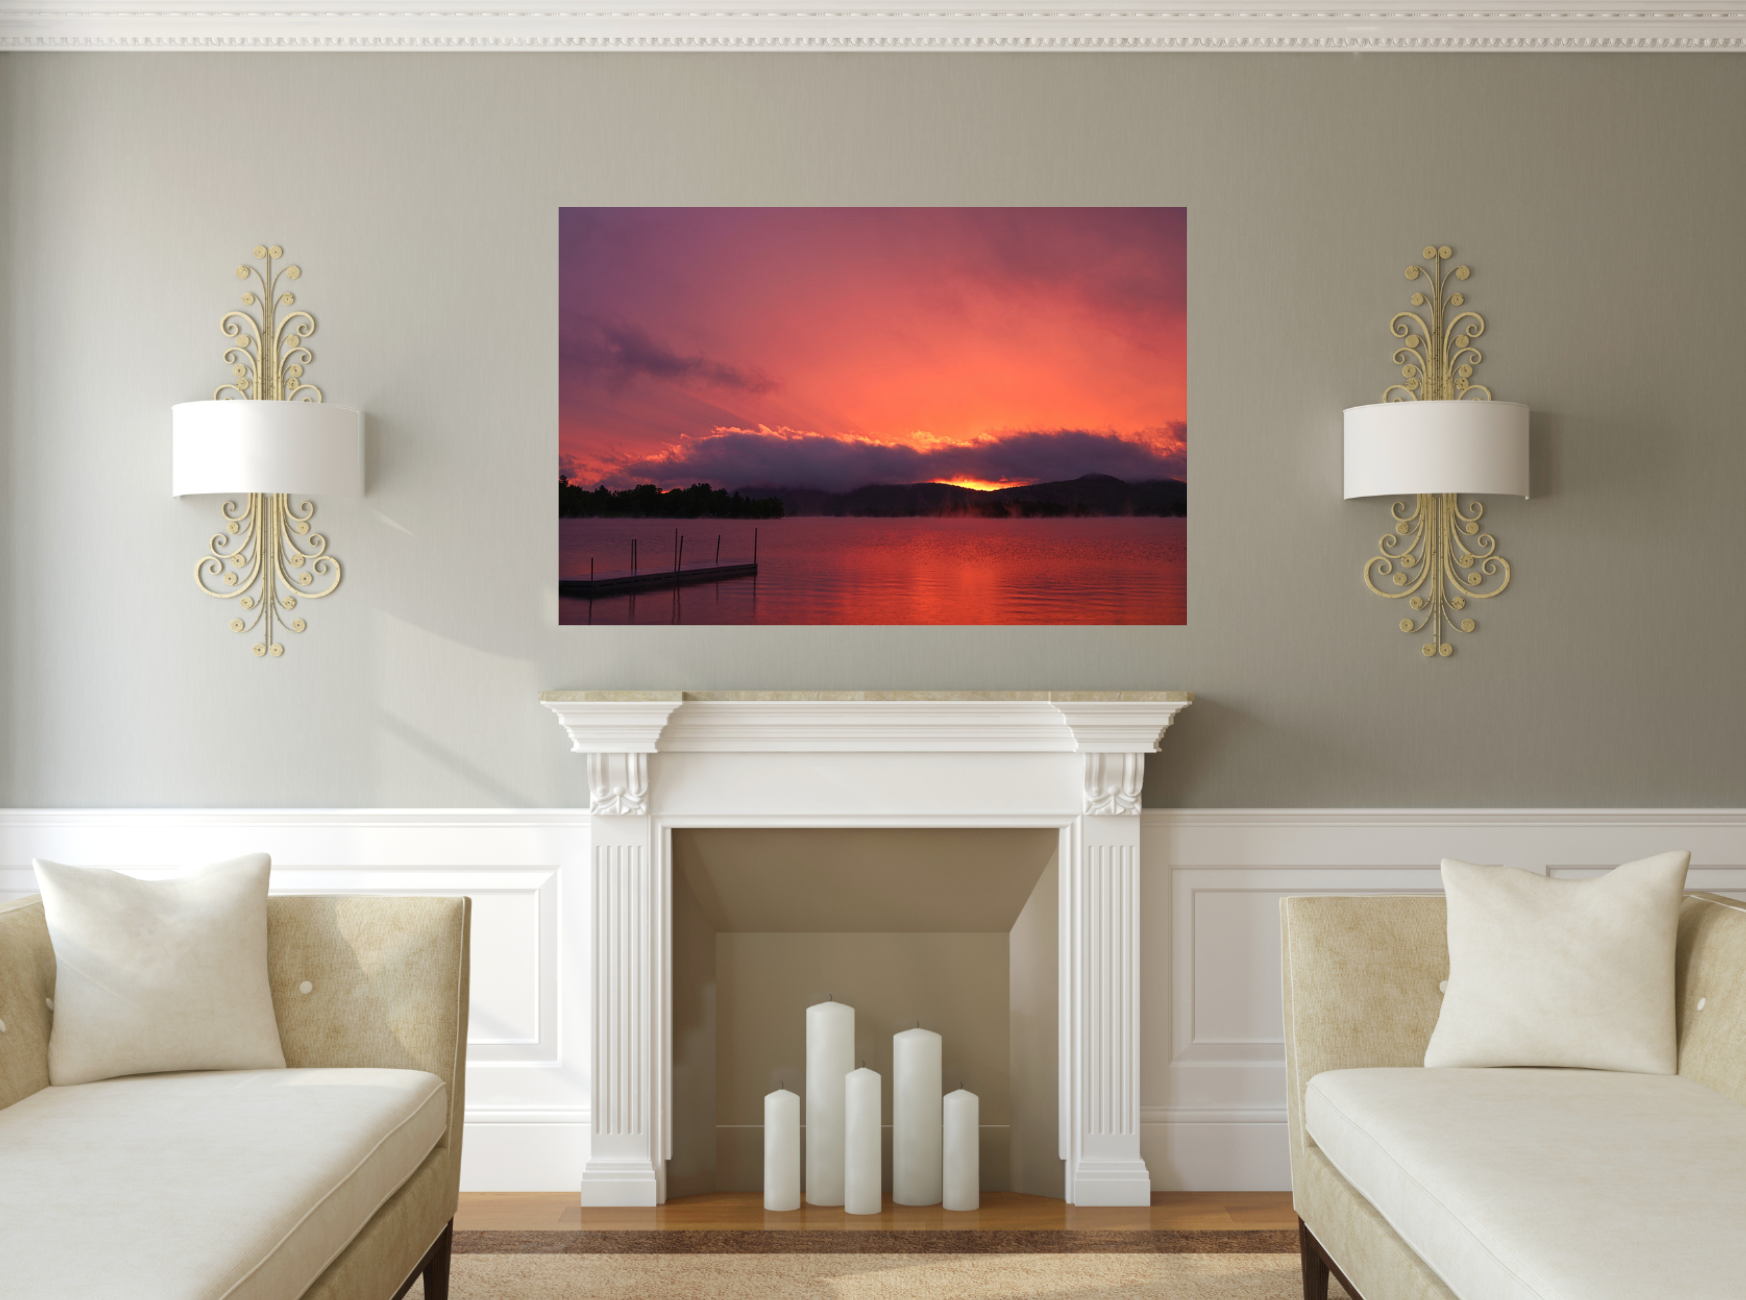 print of a sunset on a lake